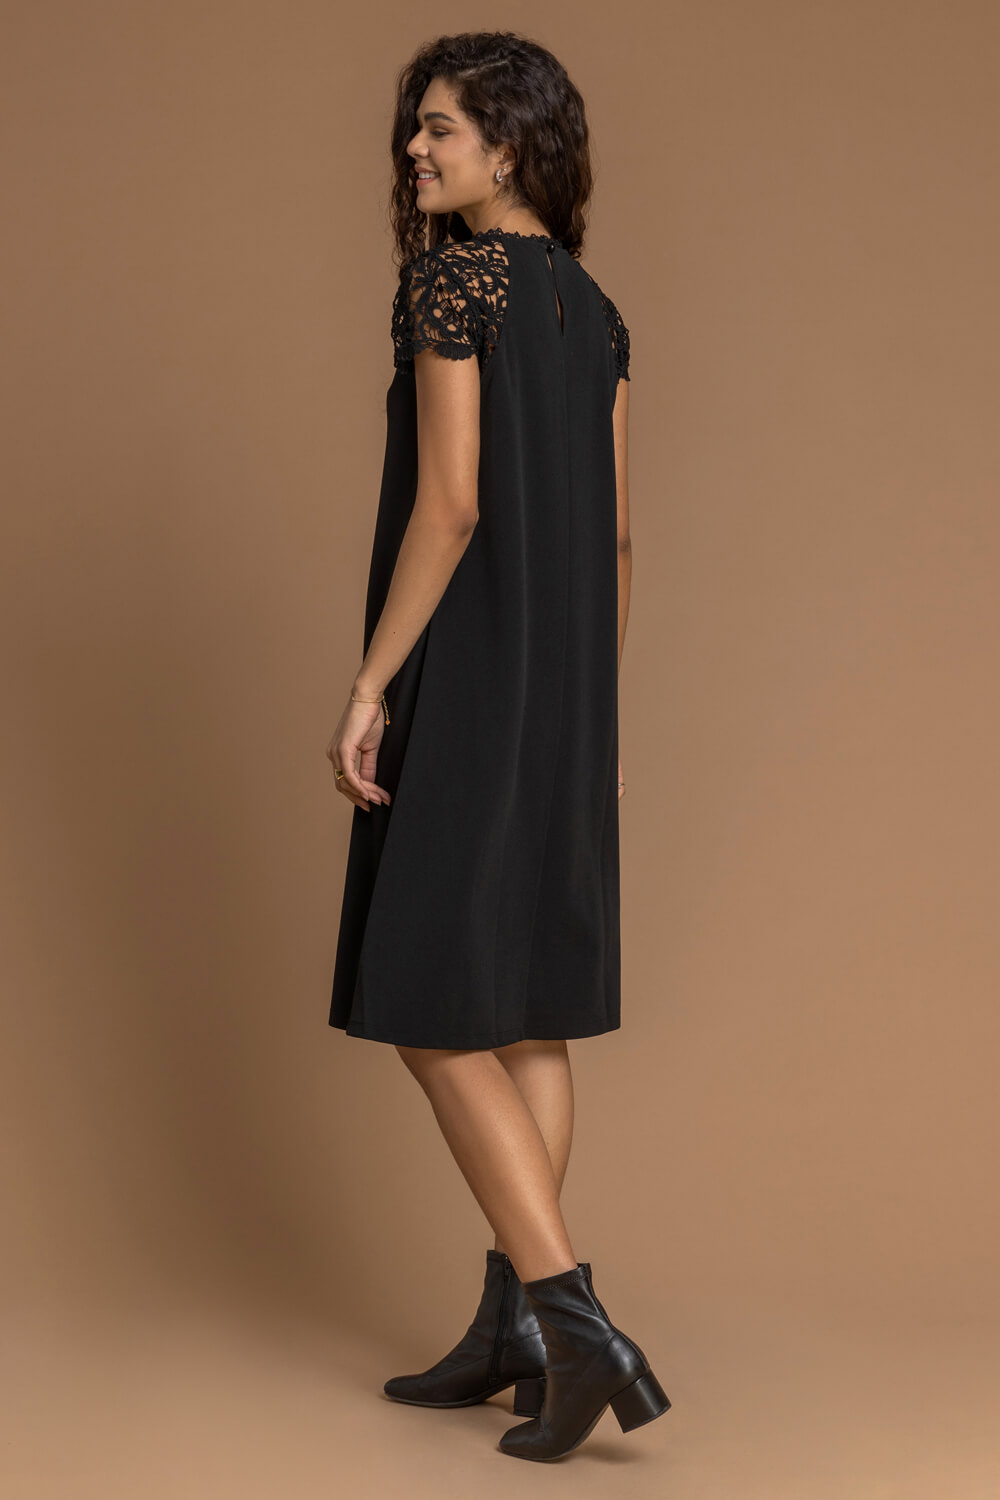 Black Lace Trim High Neck Shift Dress, Image 2 of 4